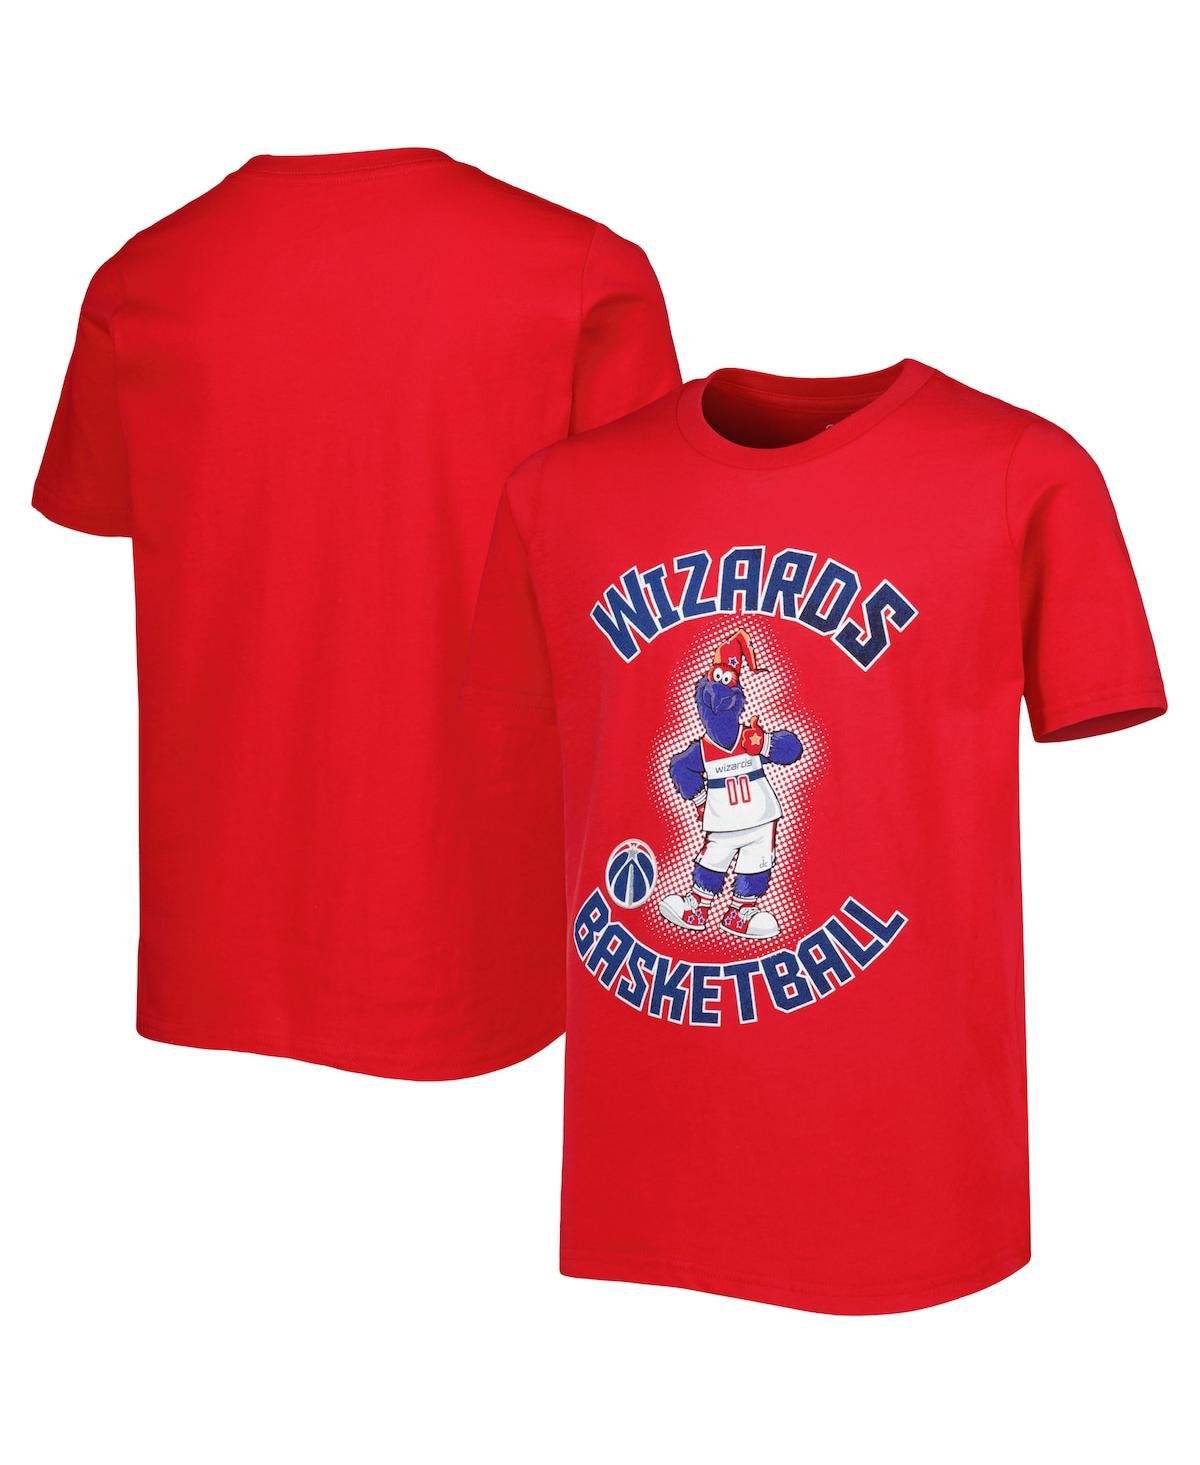 Outerstuff Kids' Big Boys Red Washington Wizards Mascot Show T-shirt